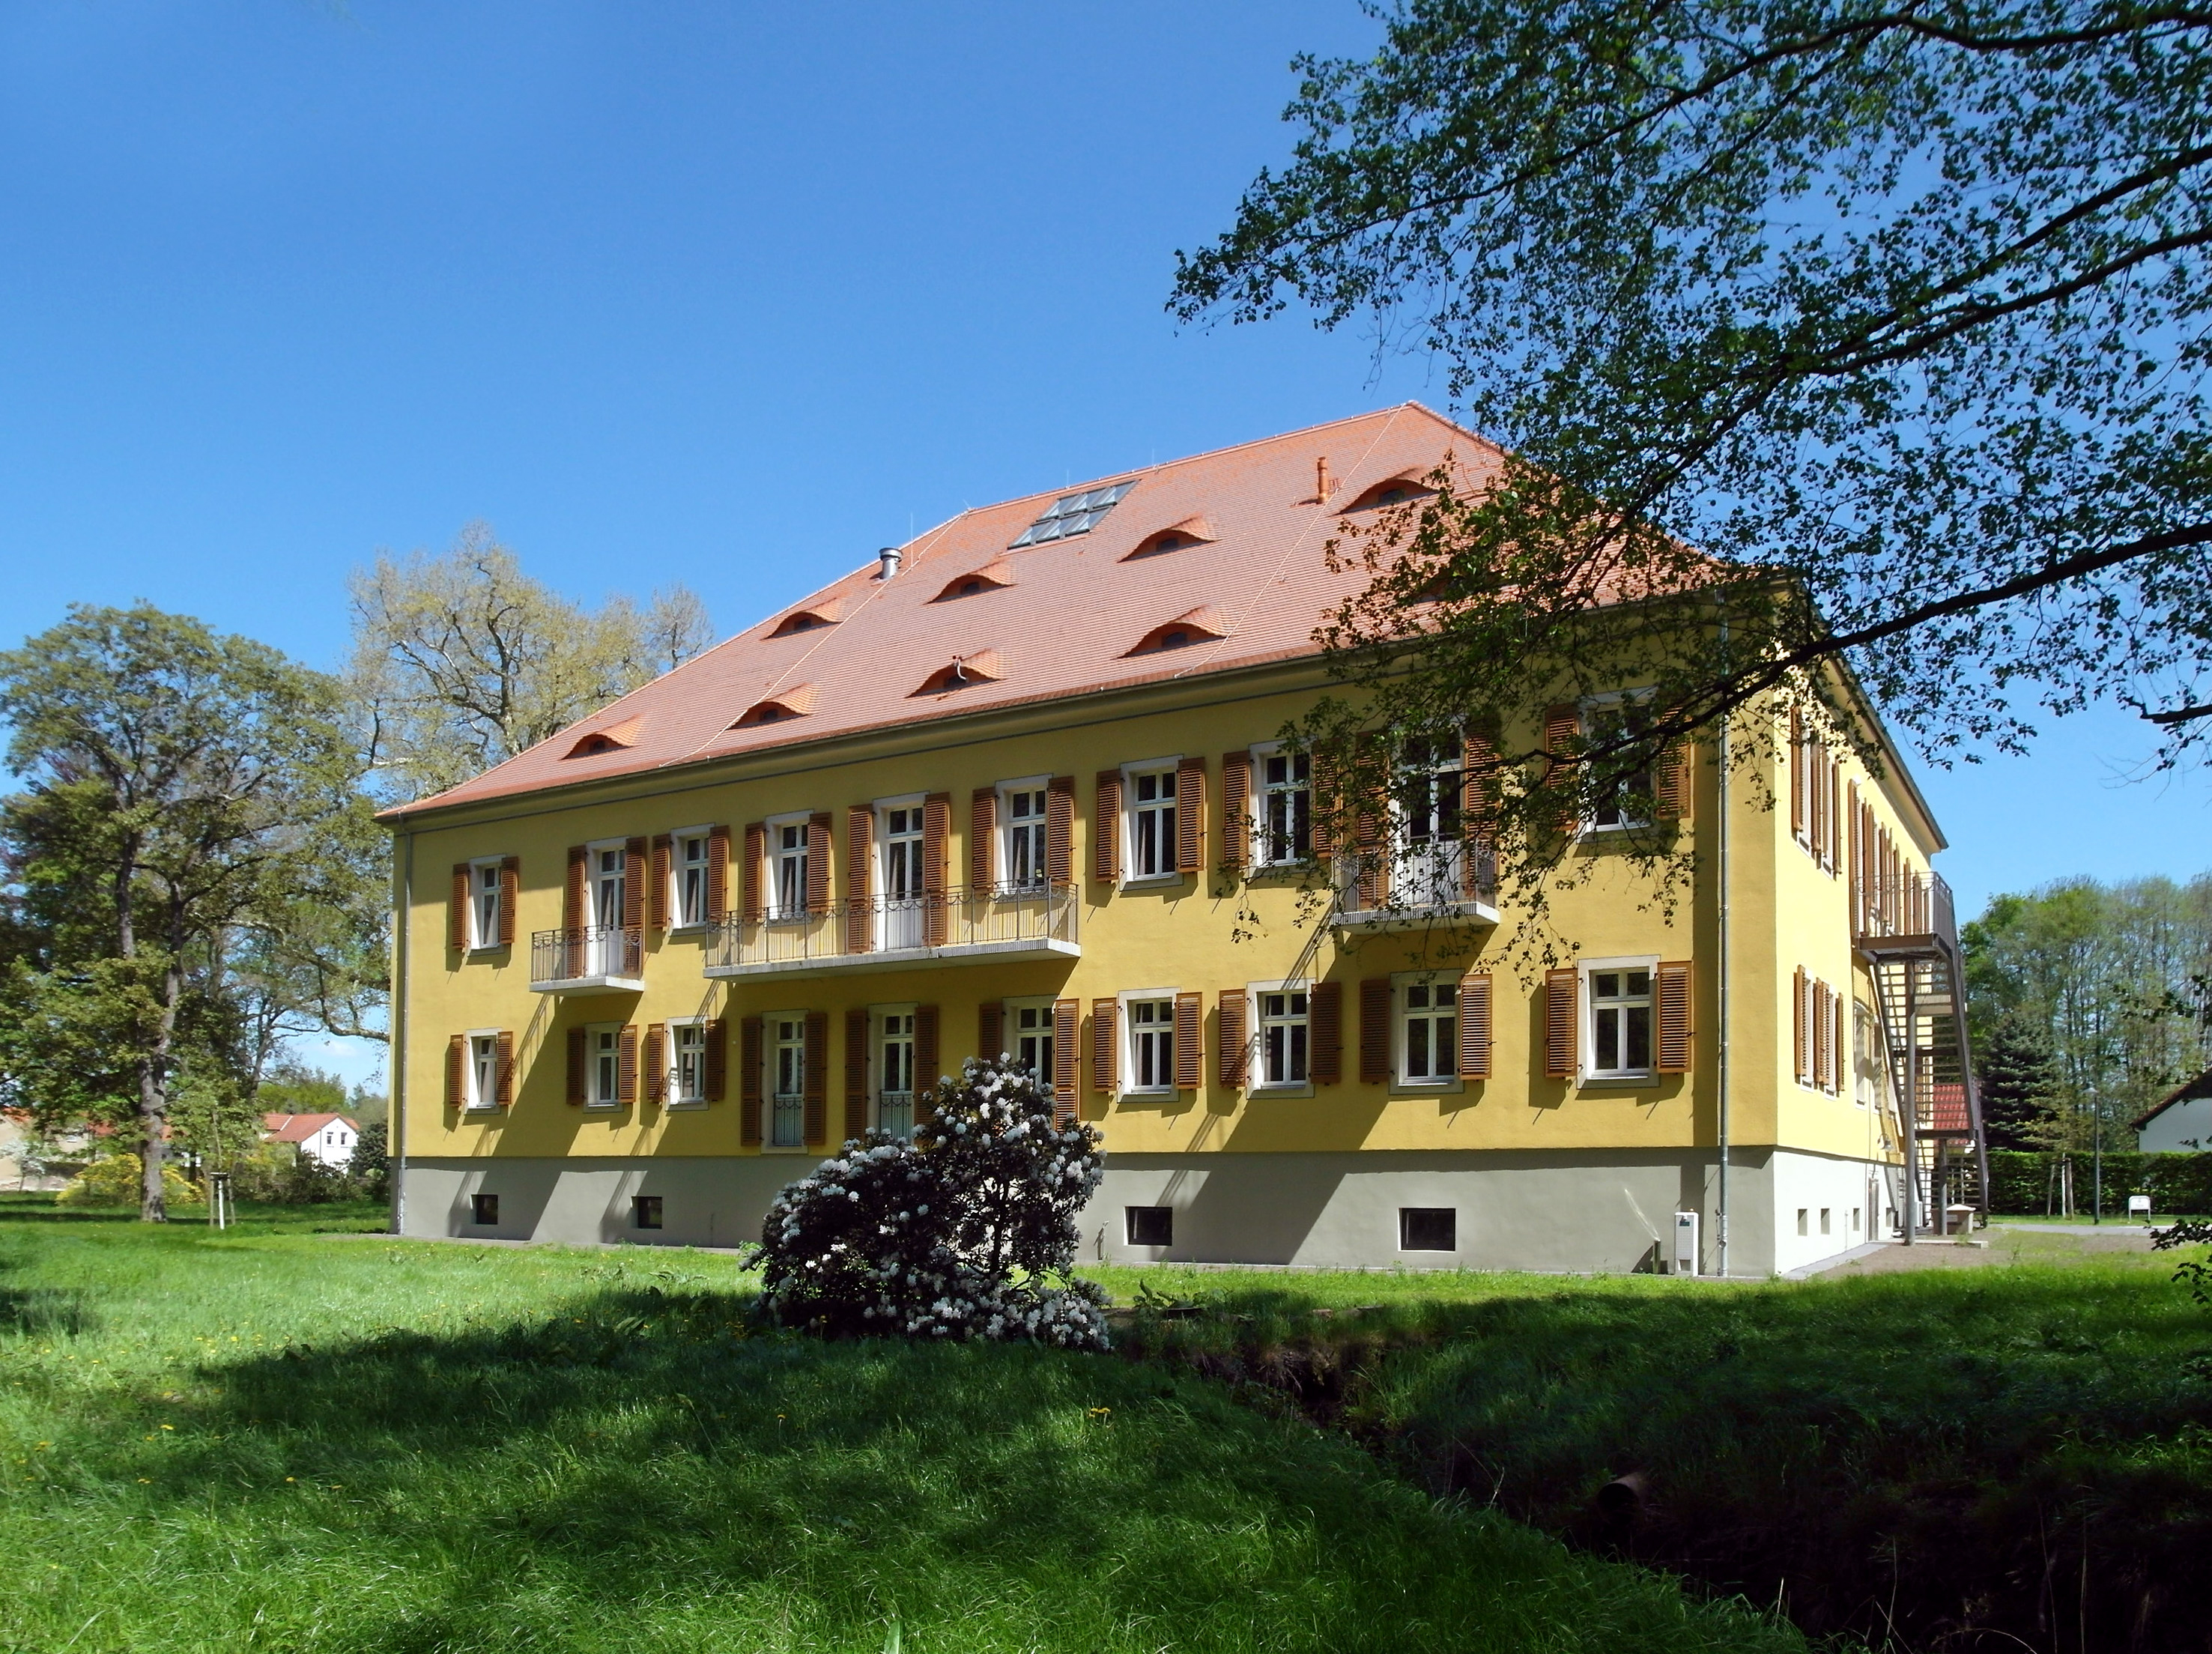 File:20160509615DR Bernsdorf OL Schloß Rathaus.jpg - Wikimedia Commons